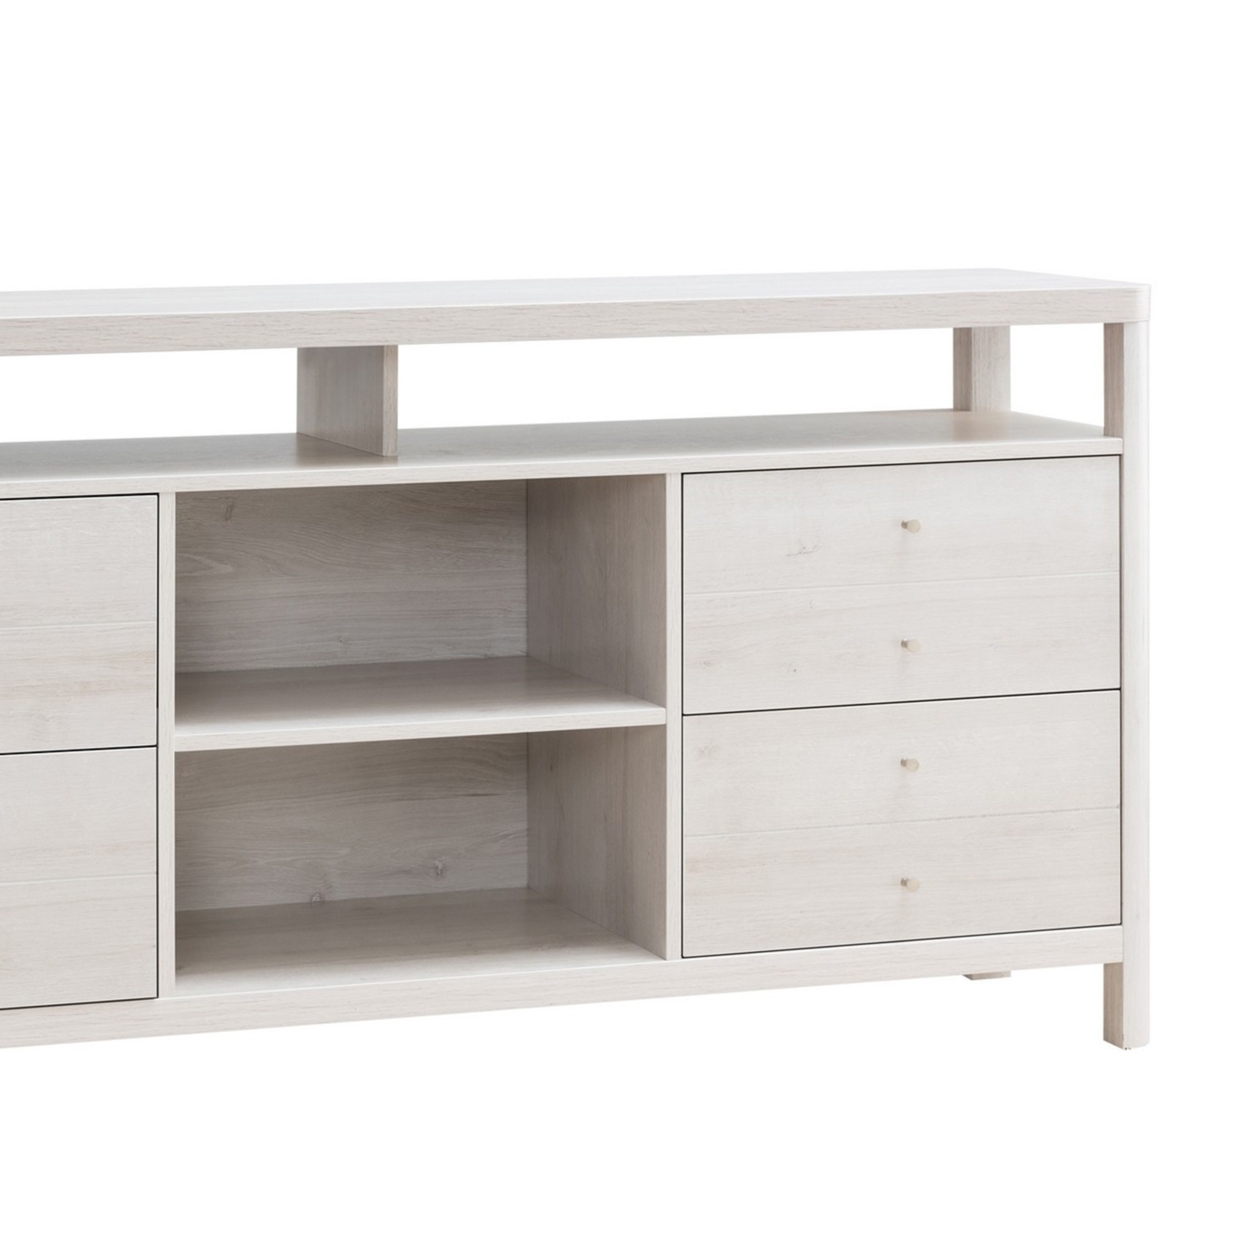 60 Inch Modern Sideboard Buffet Console Cabinet, 4 Drawers, Wood, White Oak - Saltoro Sherpi